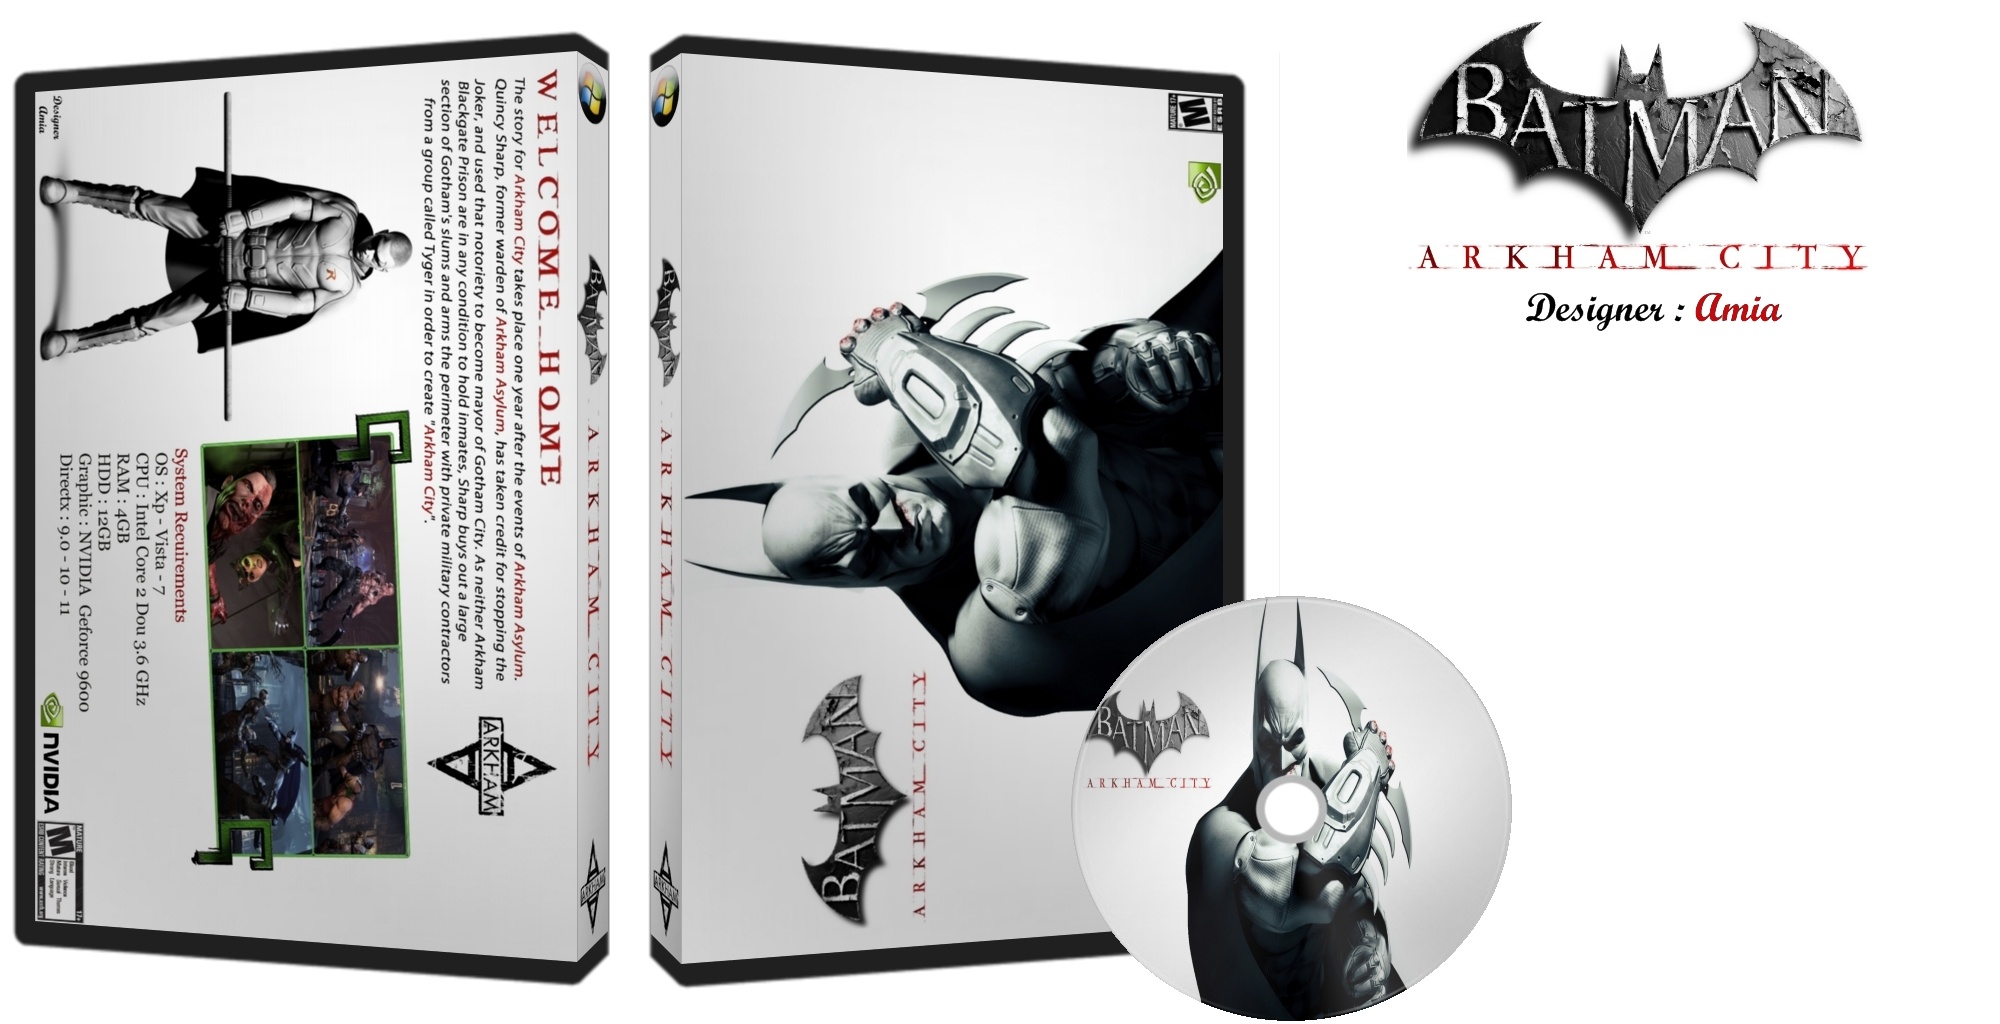 Batman Arkham City box cover